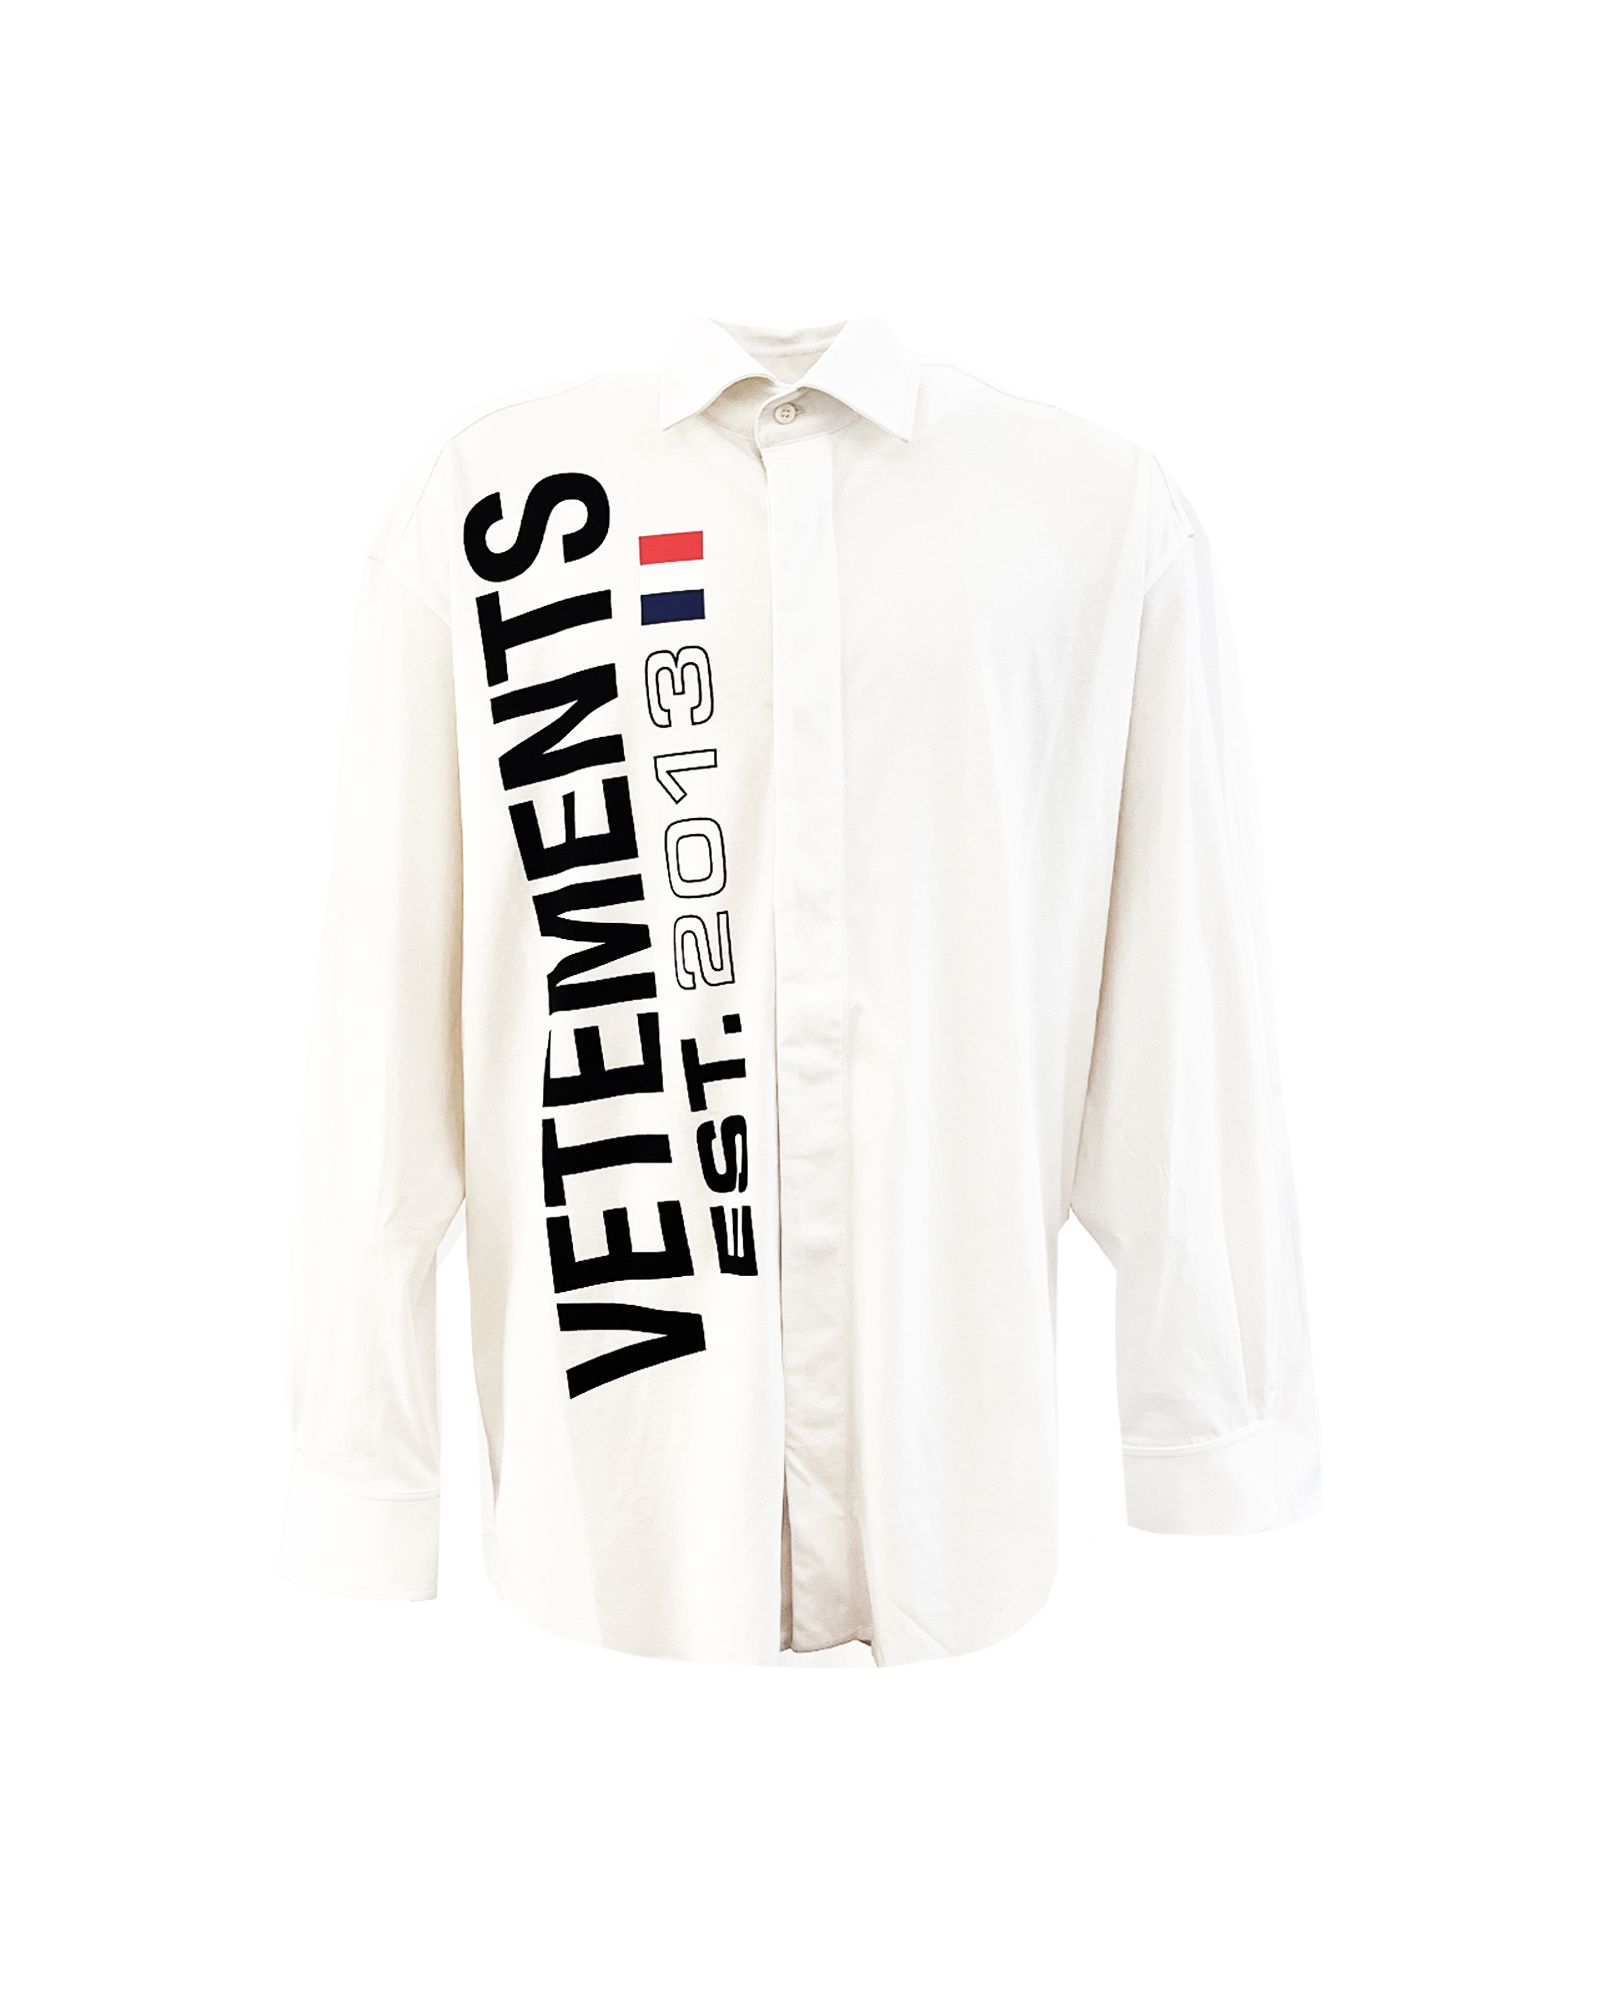 VETEMENTS - ヴェトモン/Vetements graffiti shirt/グラフィックシャツ 